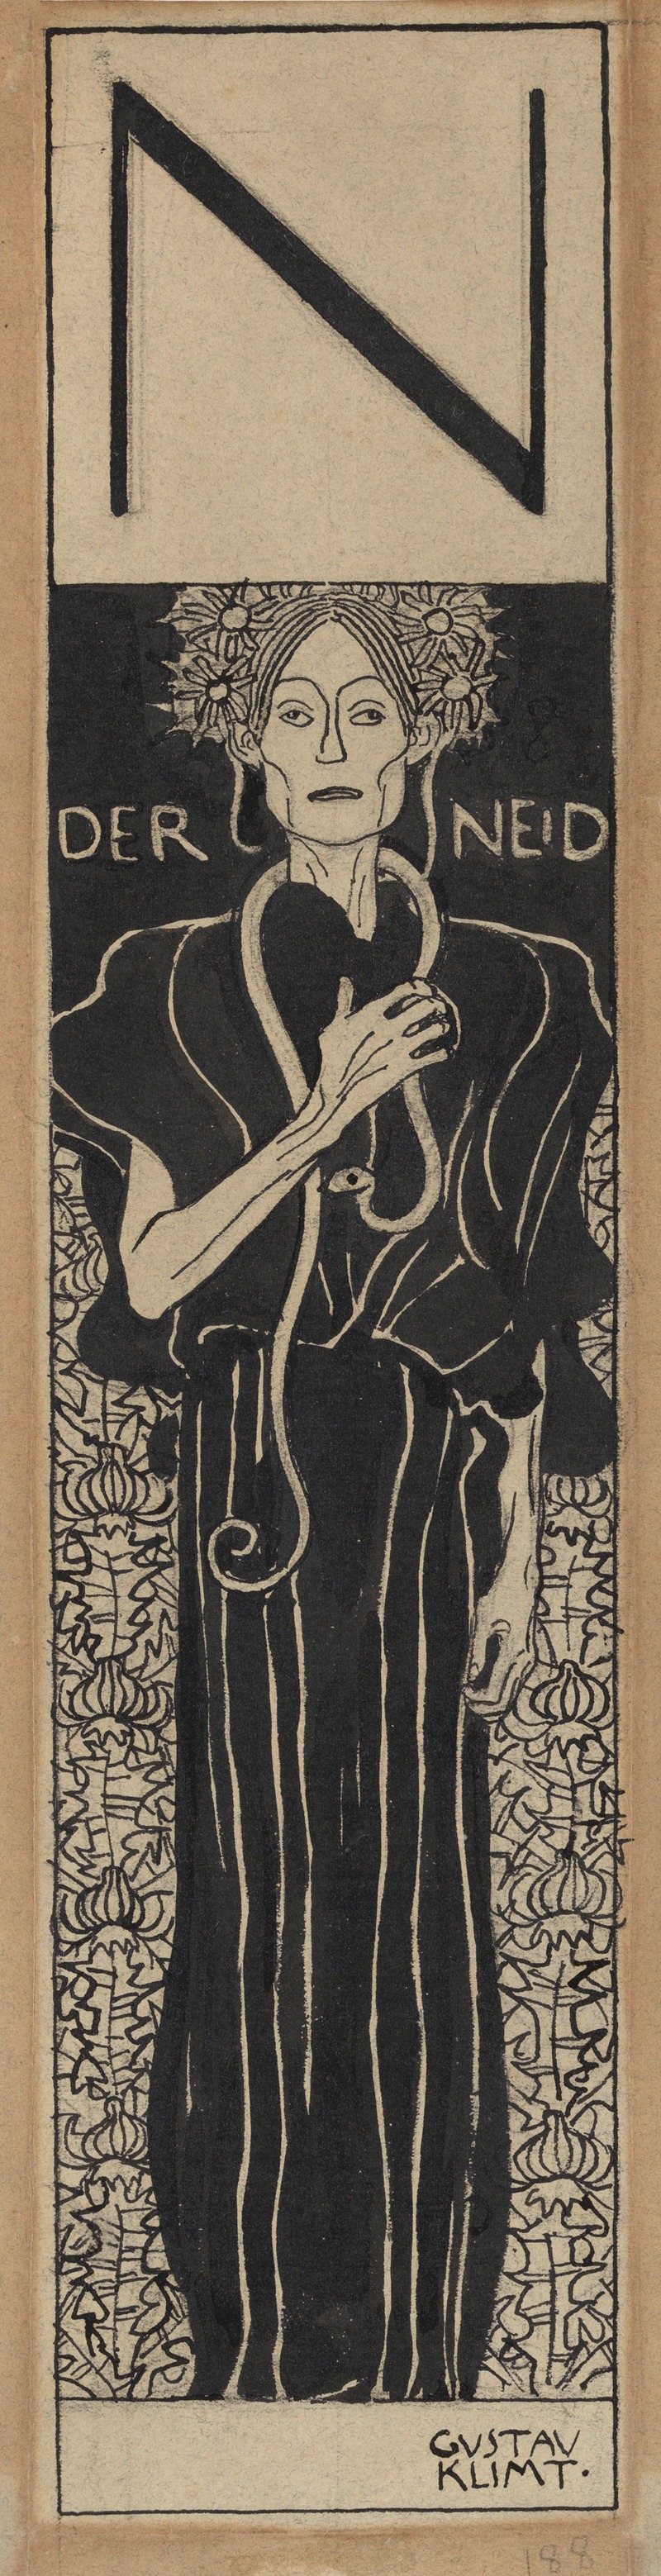 Gustav Klimt - Der Neid